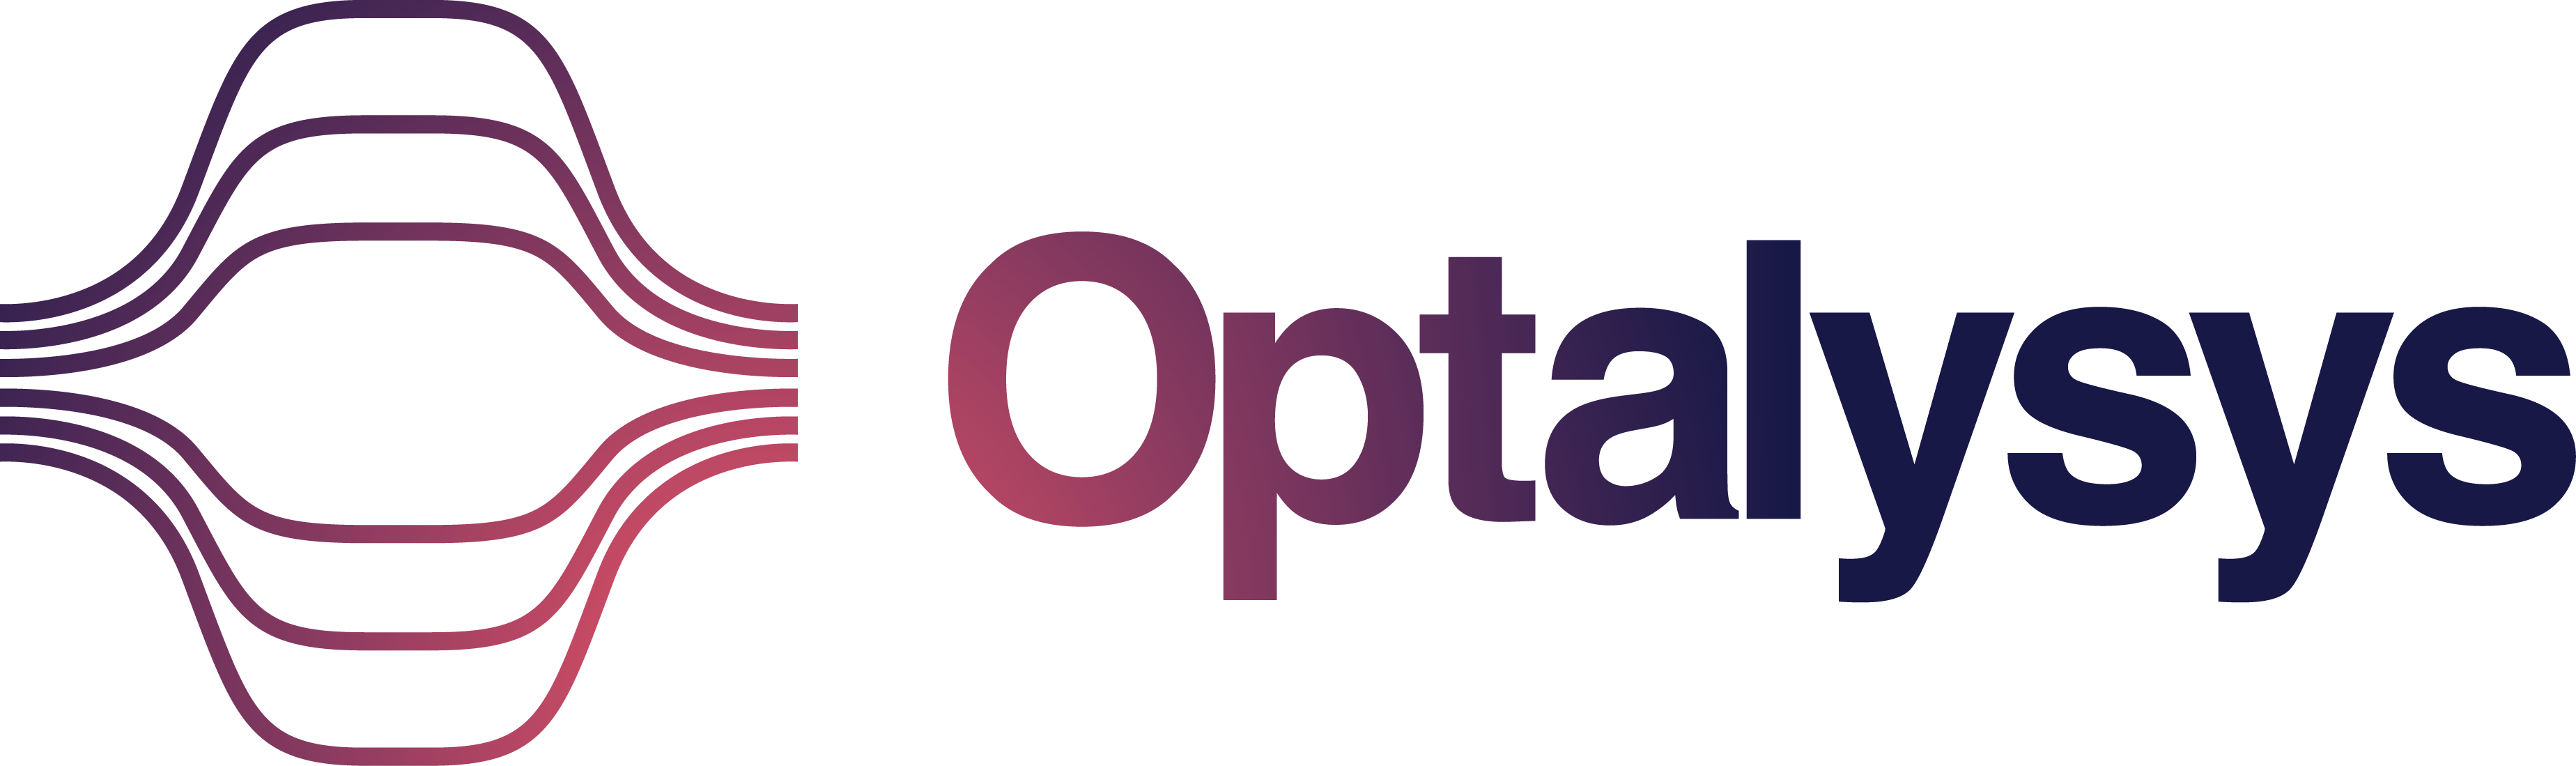 Optalysys Ltd